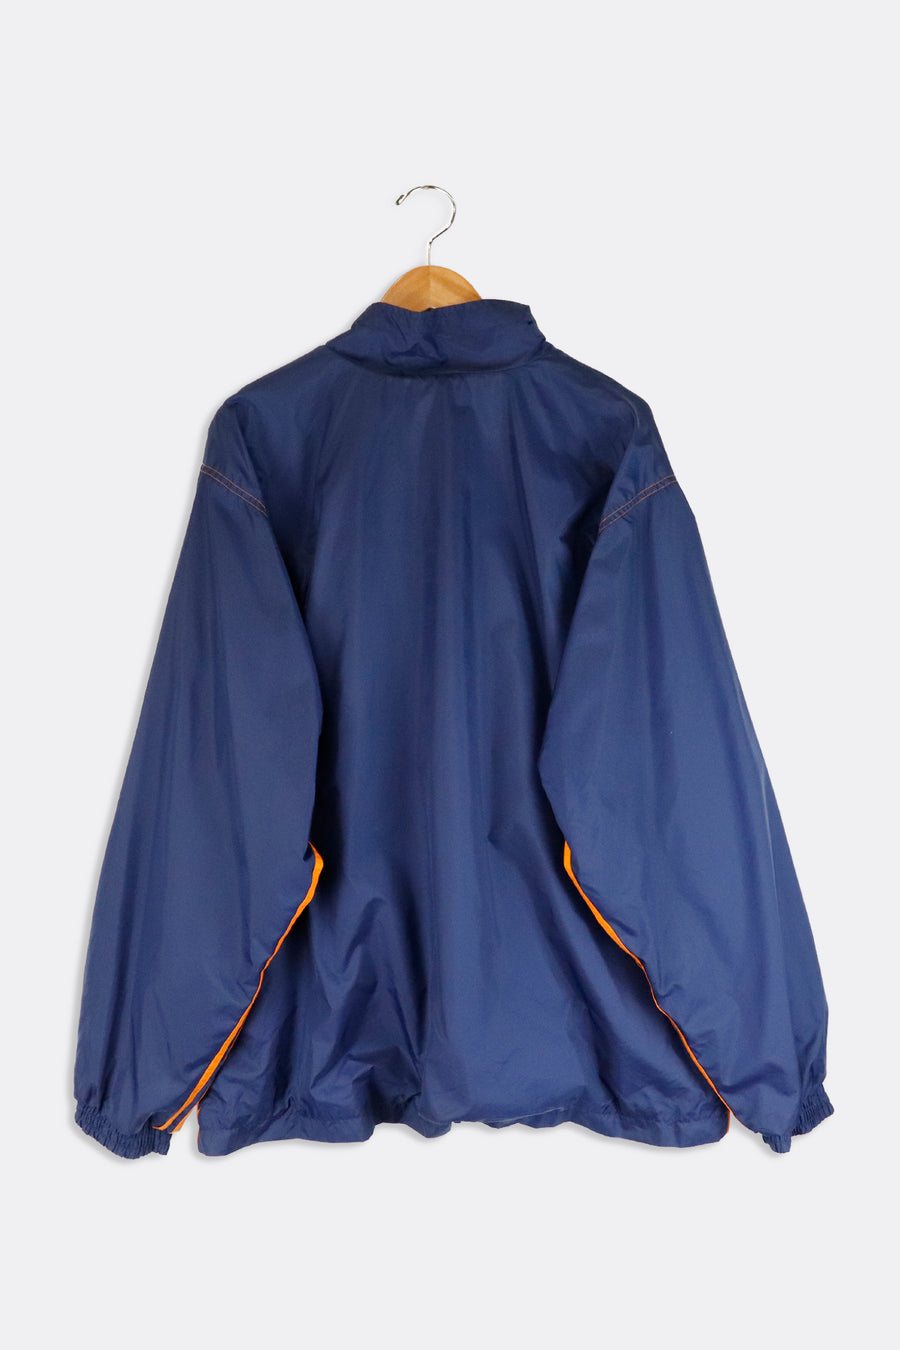 Vintage Adidas Jersey Lined Windbreaker Jacket Sz XL